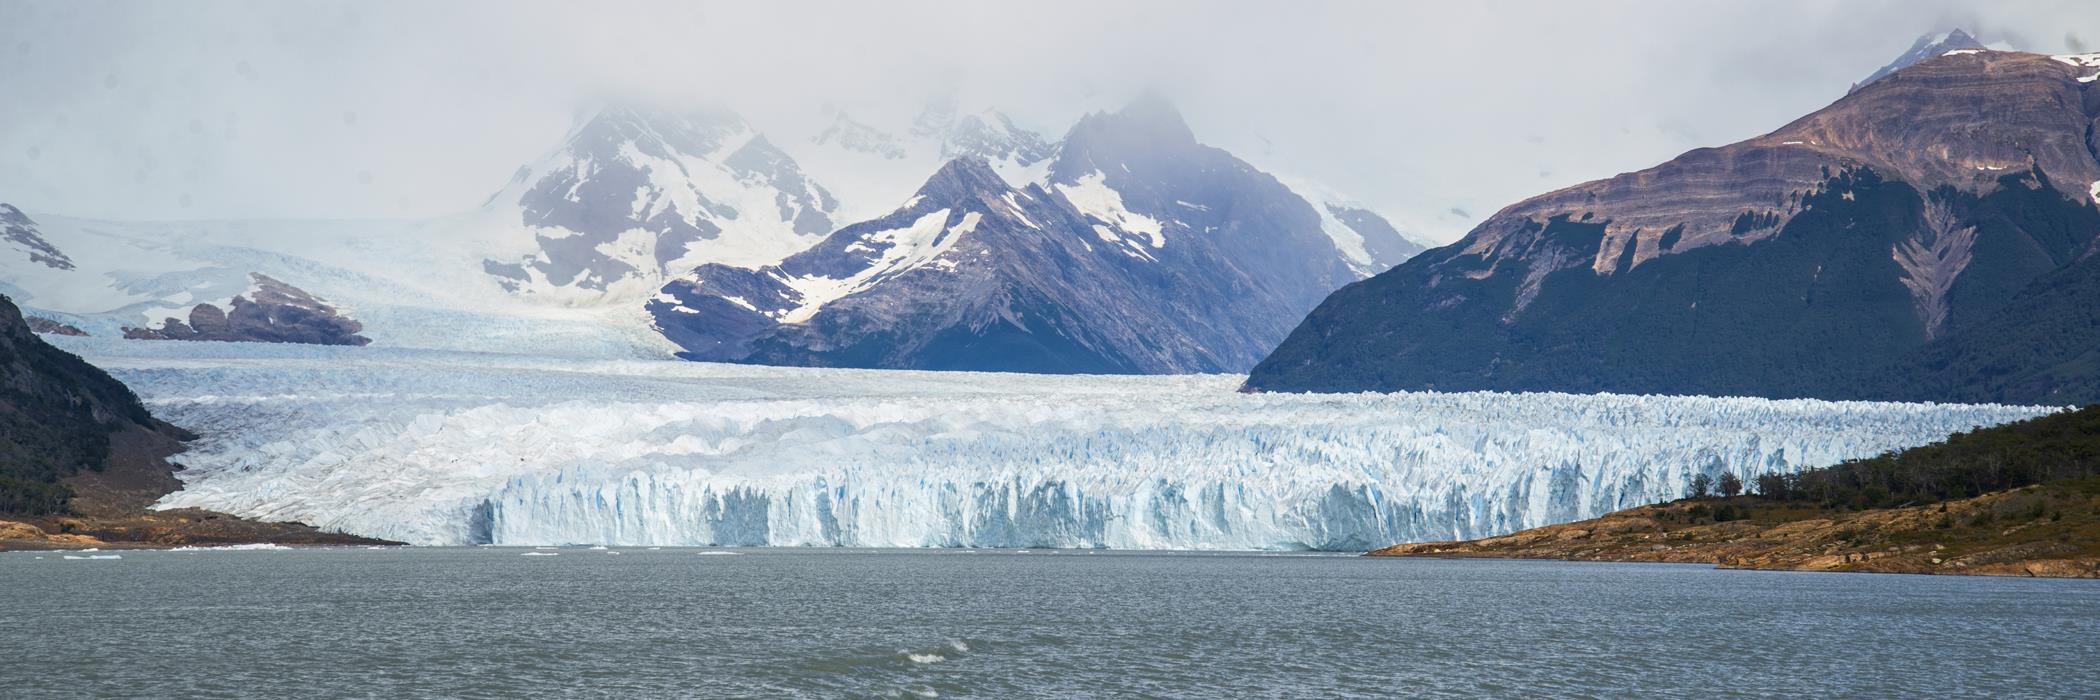 Фотокартина Панорама ледника Перито Морено